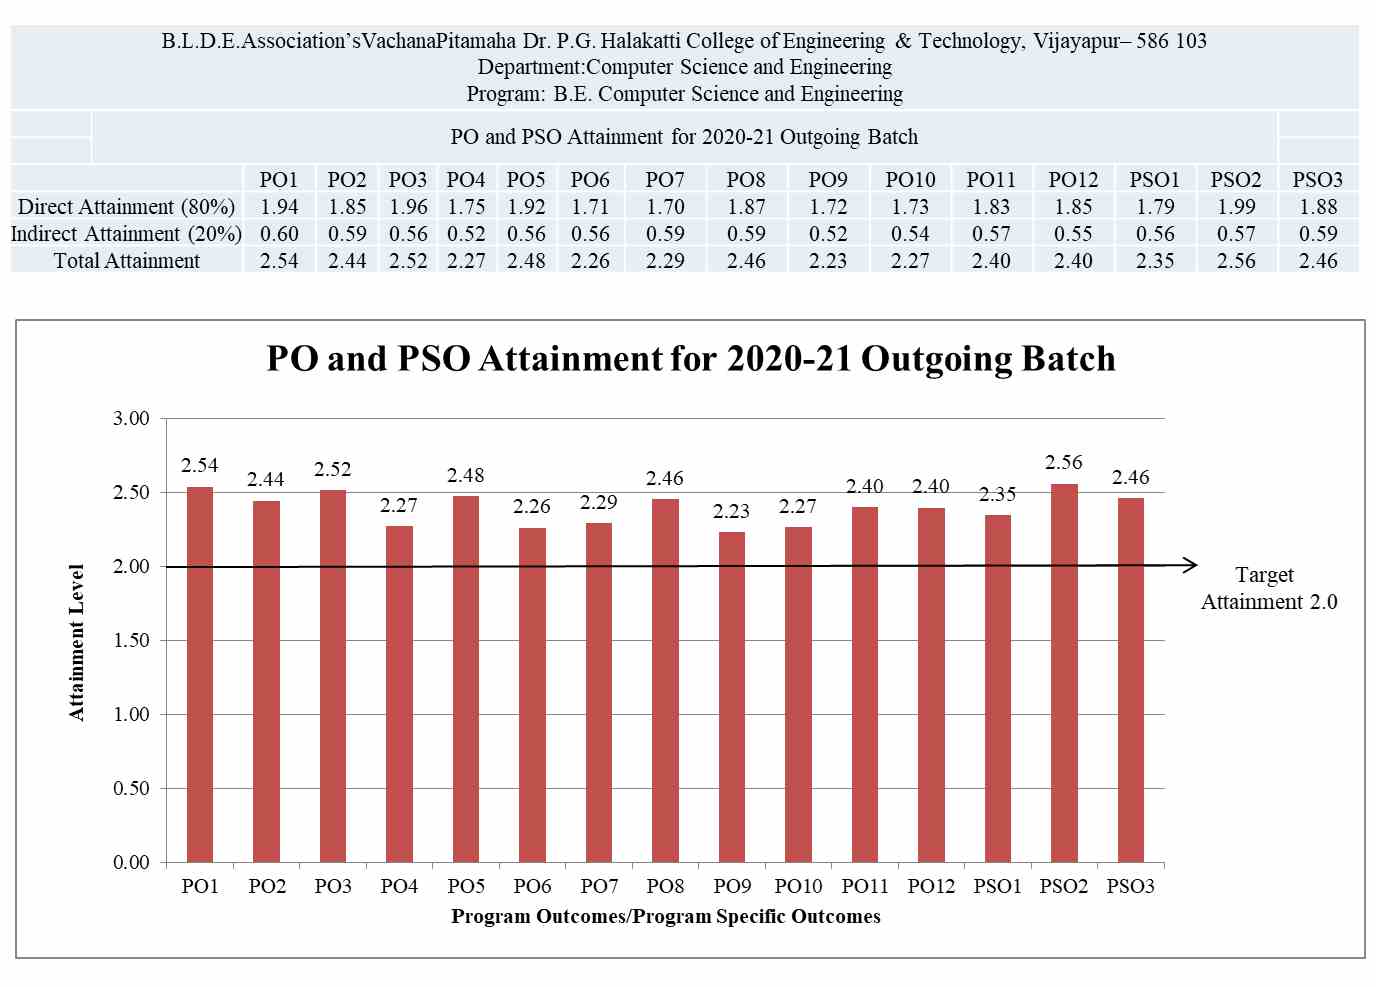 po-pso-attainment-for-2020-21-outgoing-batch